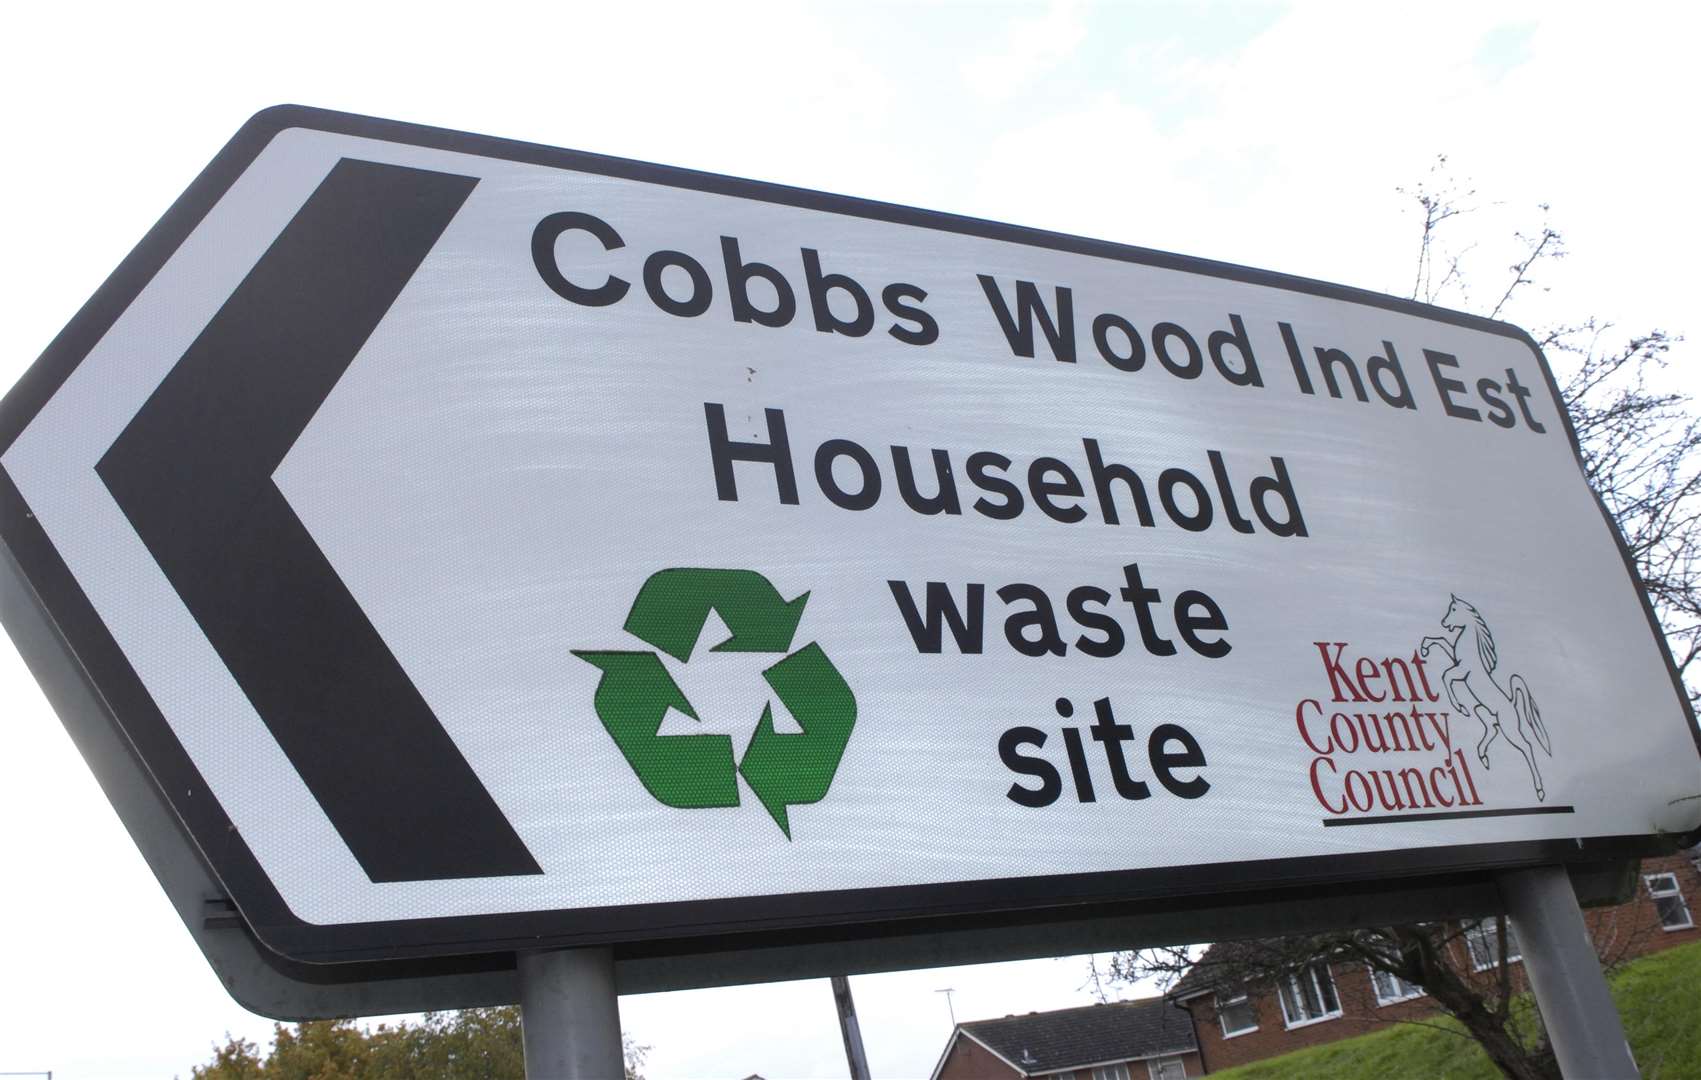 The household waste site in Cobbs Wood Industrial Estate, Ashford